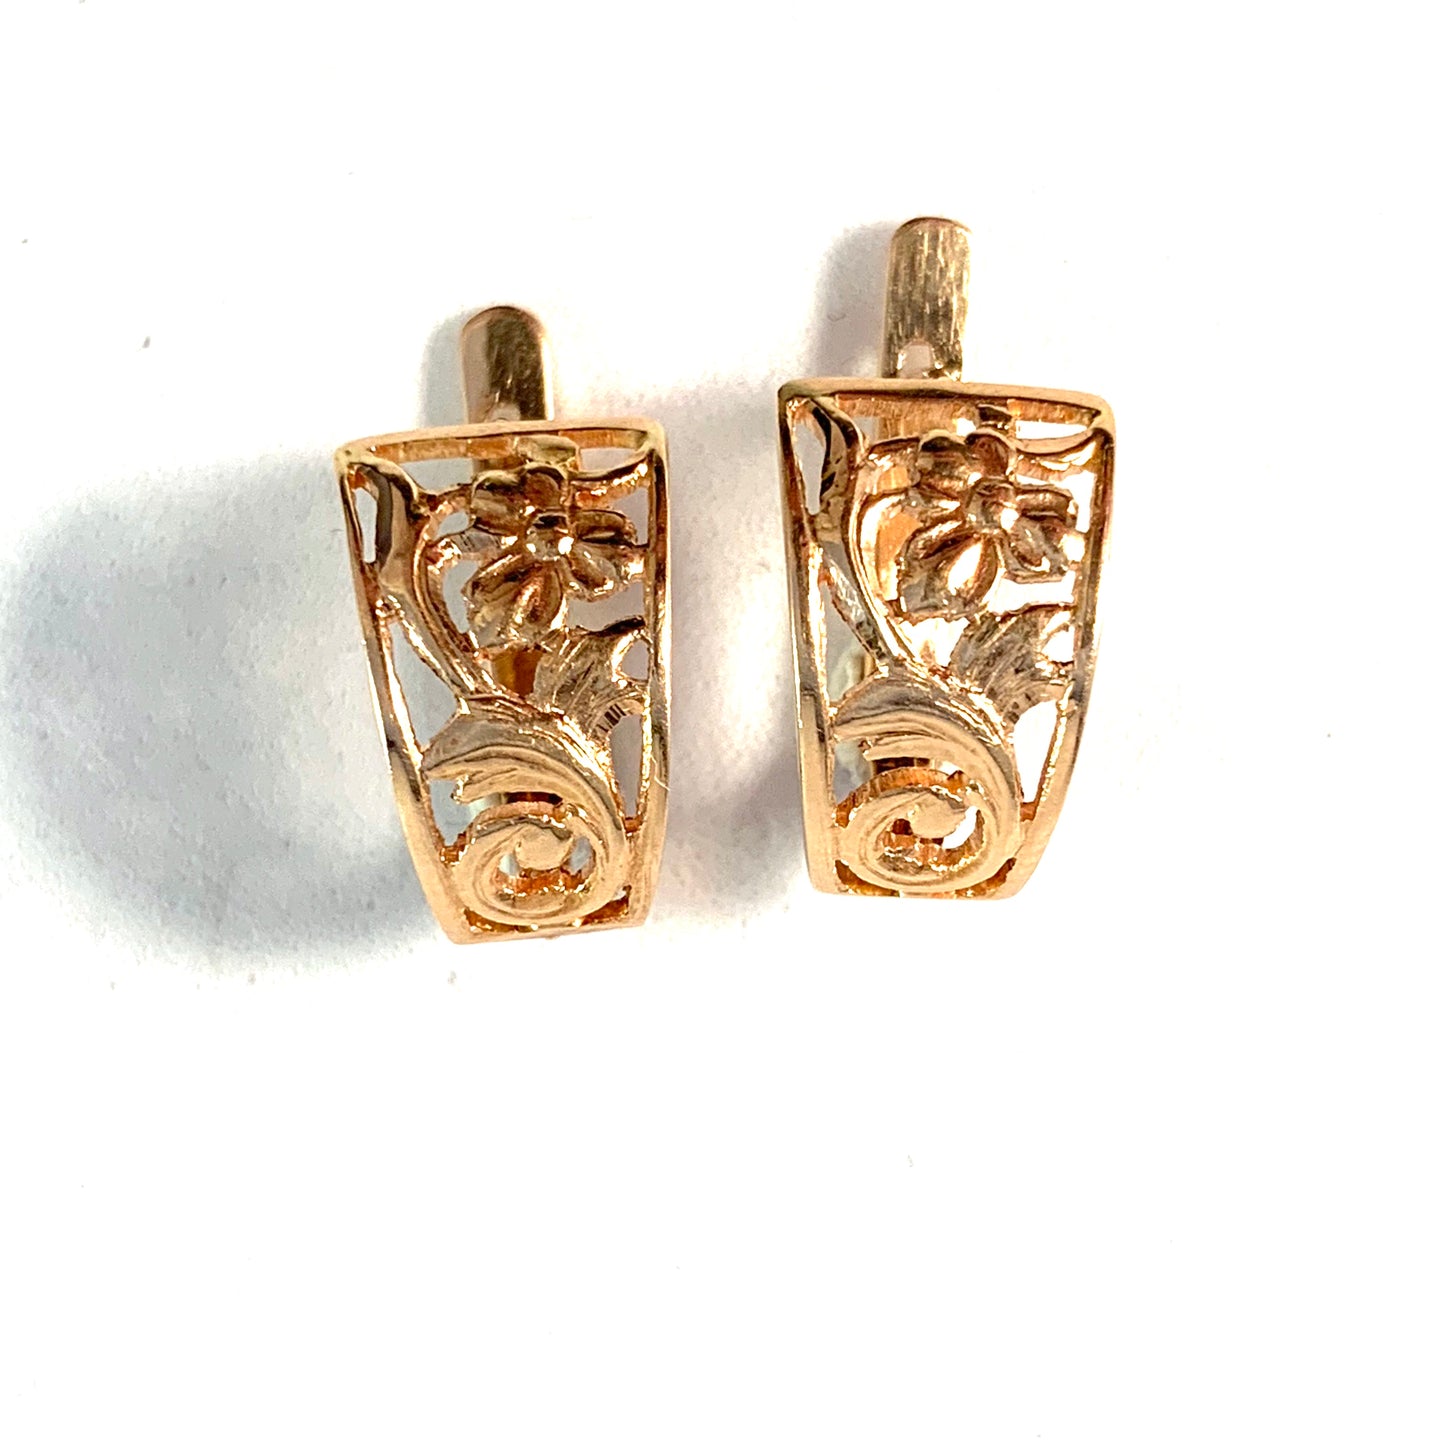 Russia, Soviet Era, Mid Century 14k Gold Earrings.